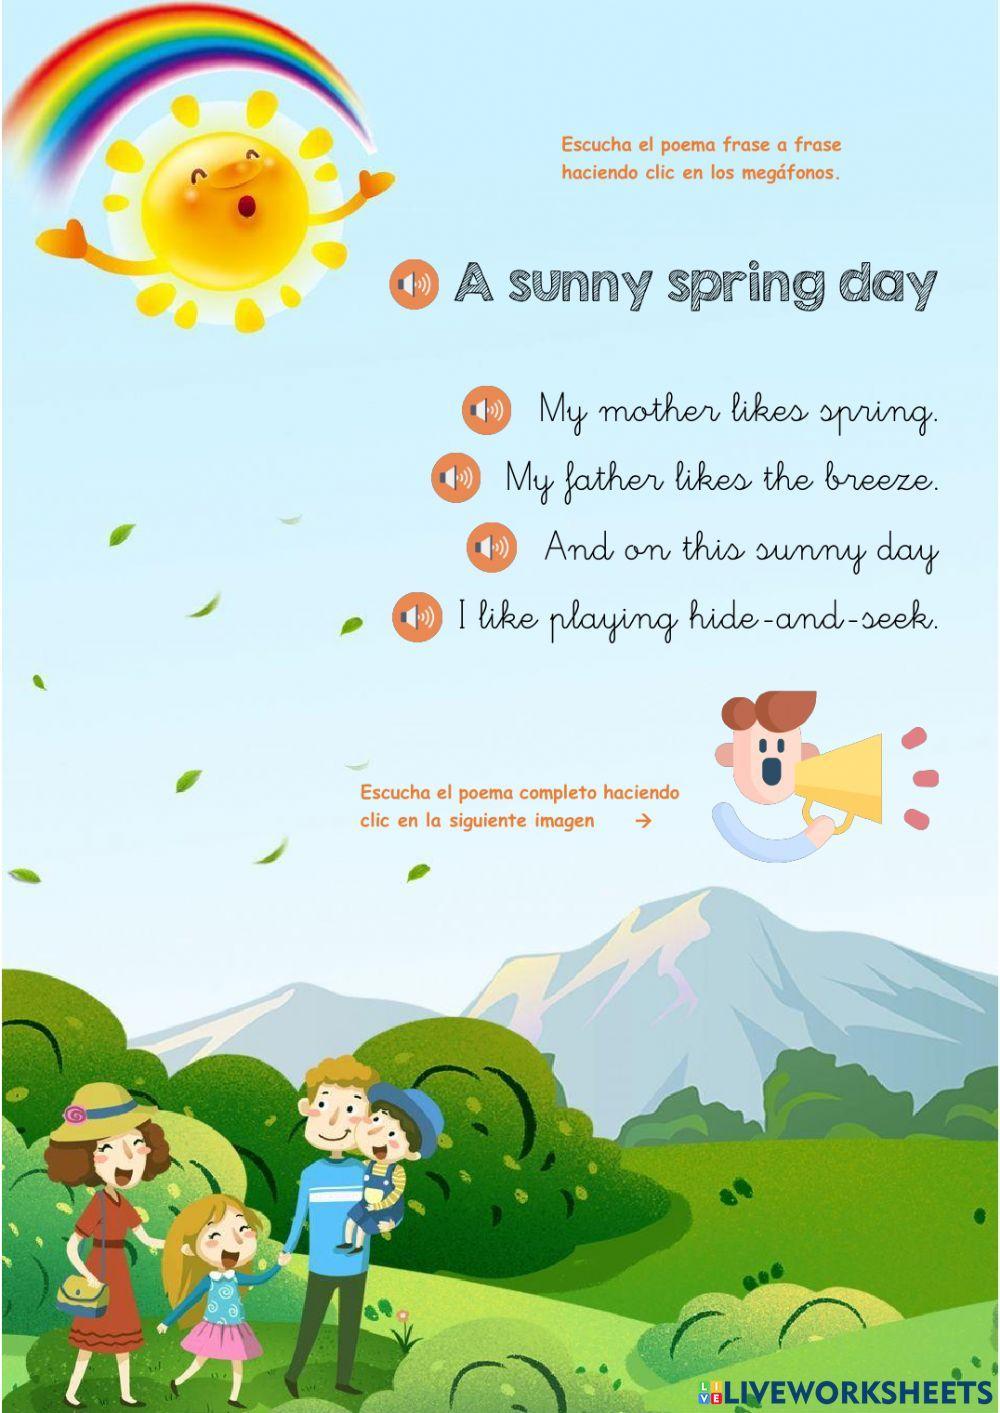 Poem: A sunny spring day